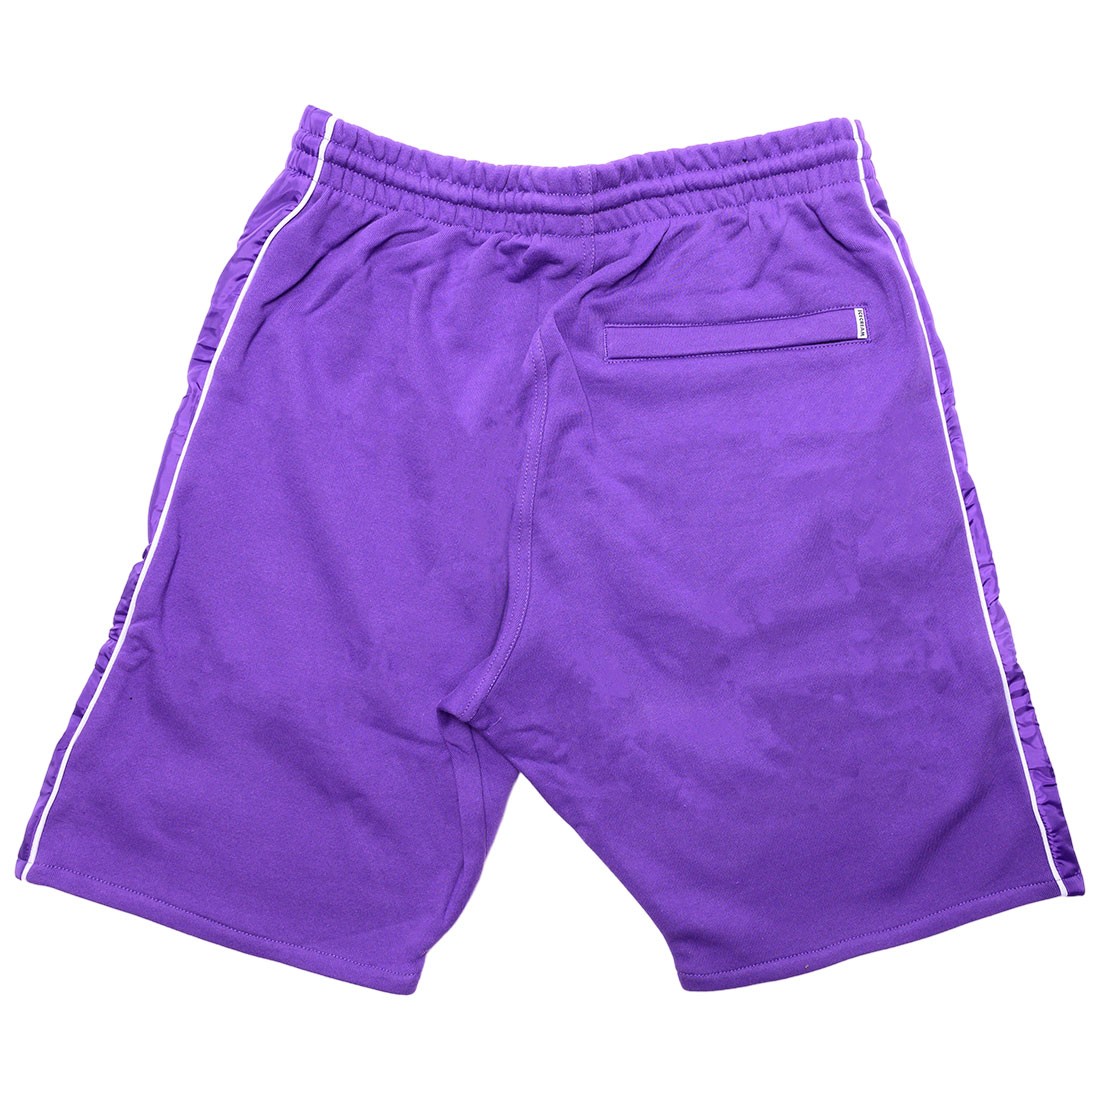 Ice Cream Men Arch Shorts purple heliotrope